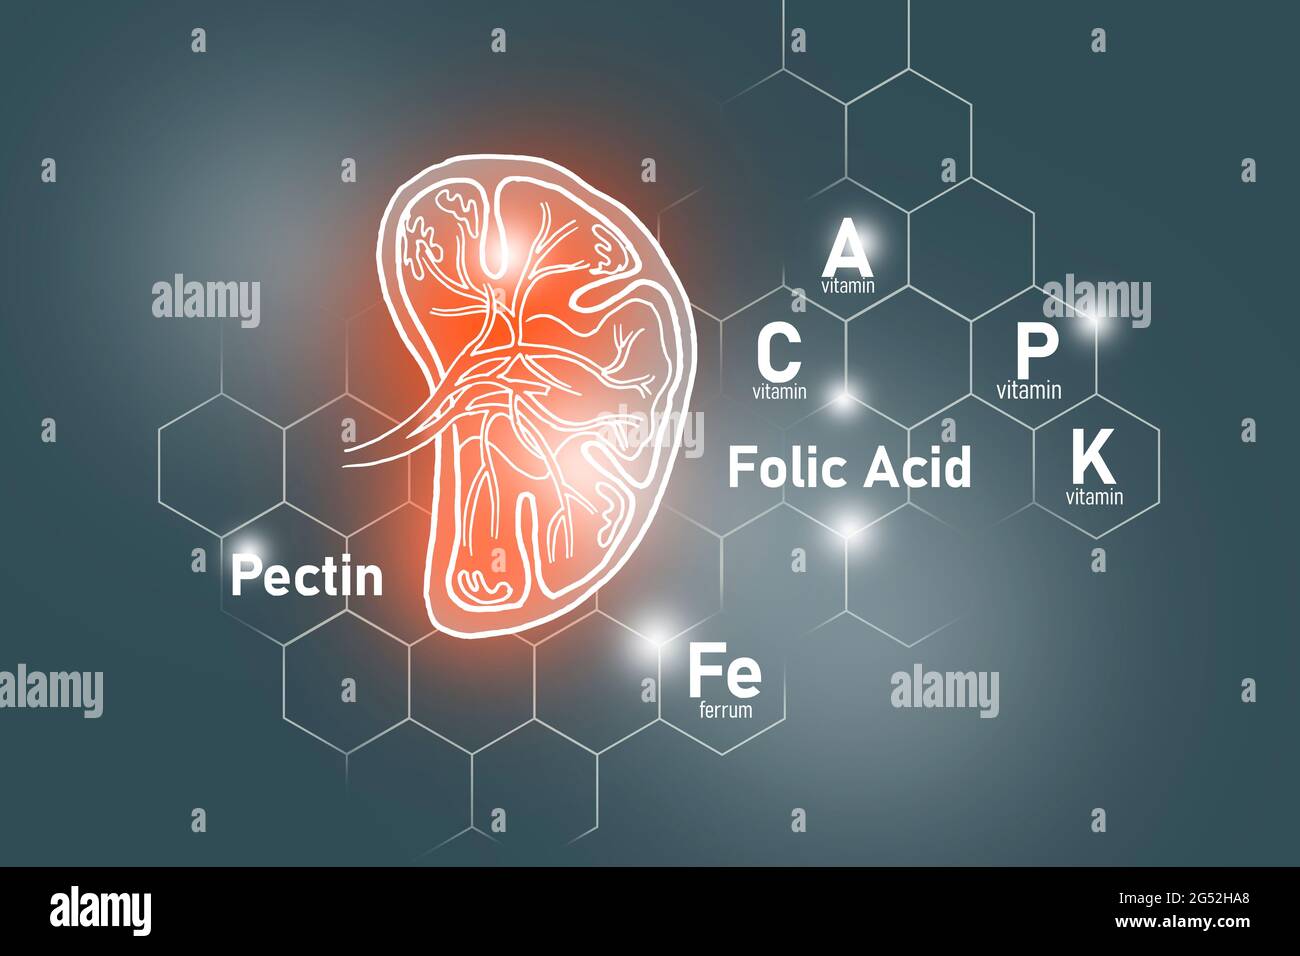 Essential nutrients for Spleen health including Pectin, Folic Acid, Vitamin P, Ferrum.Design set of main human organs on dark grey background. Stock Photo